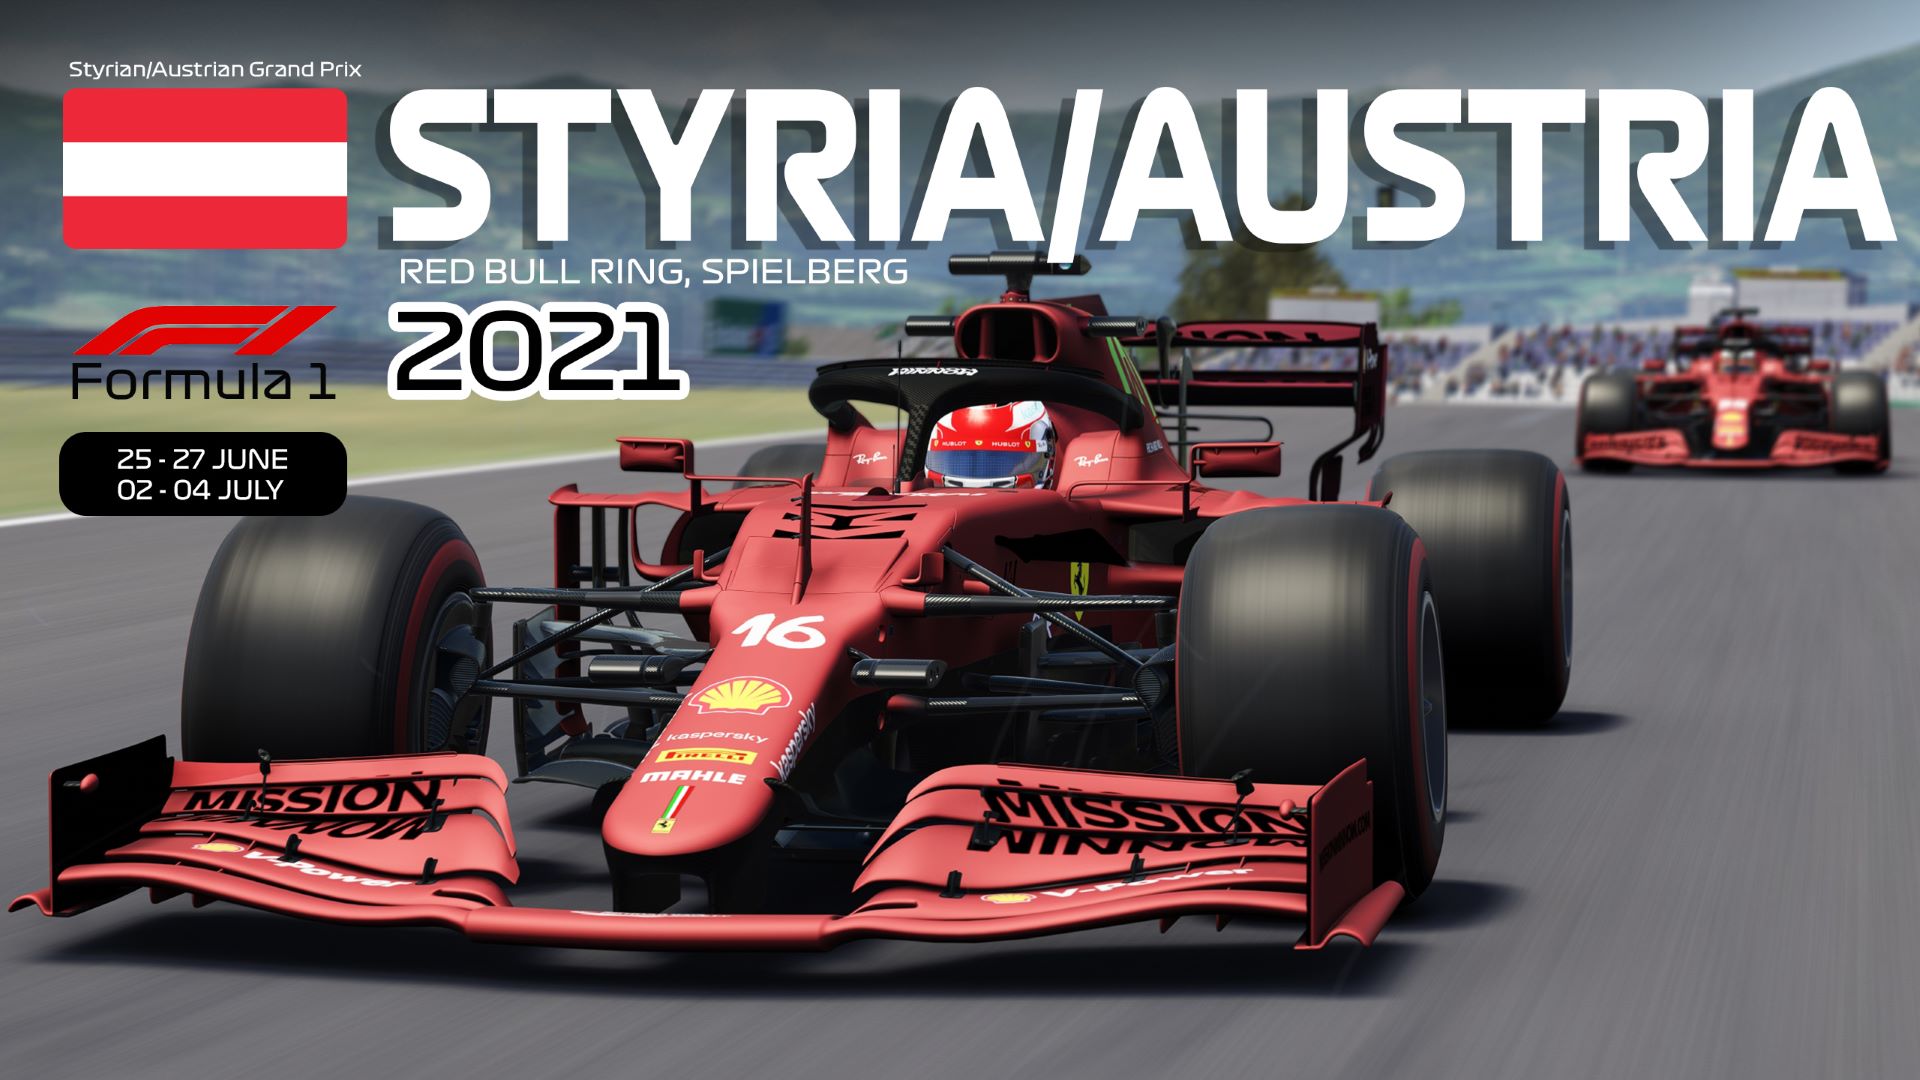 STYRIAN_F1 2021 raceday_screen bg (Large).jpg